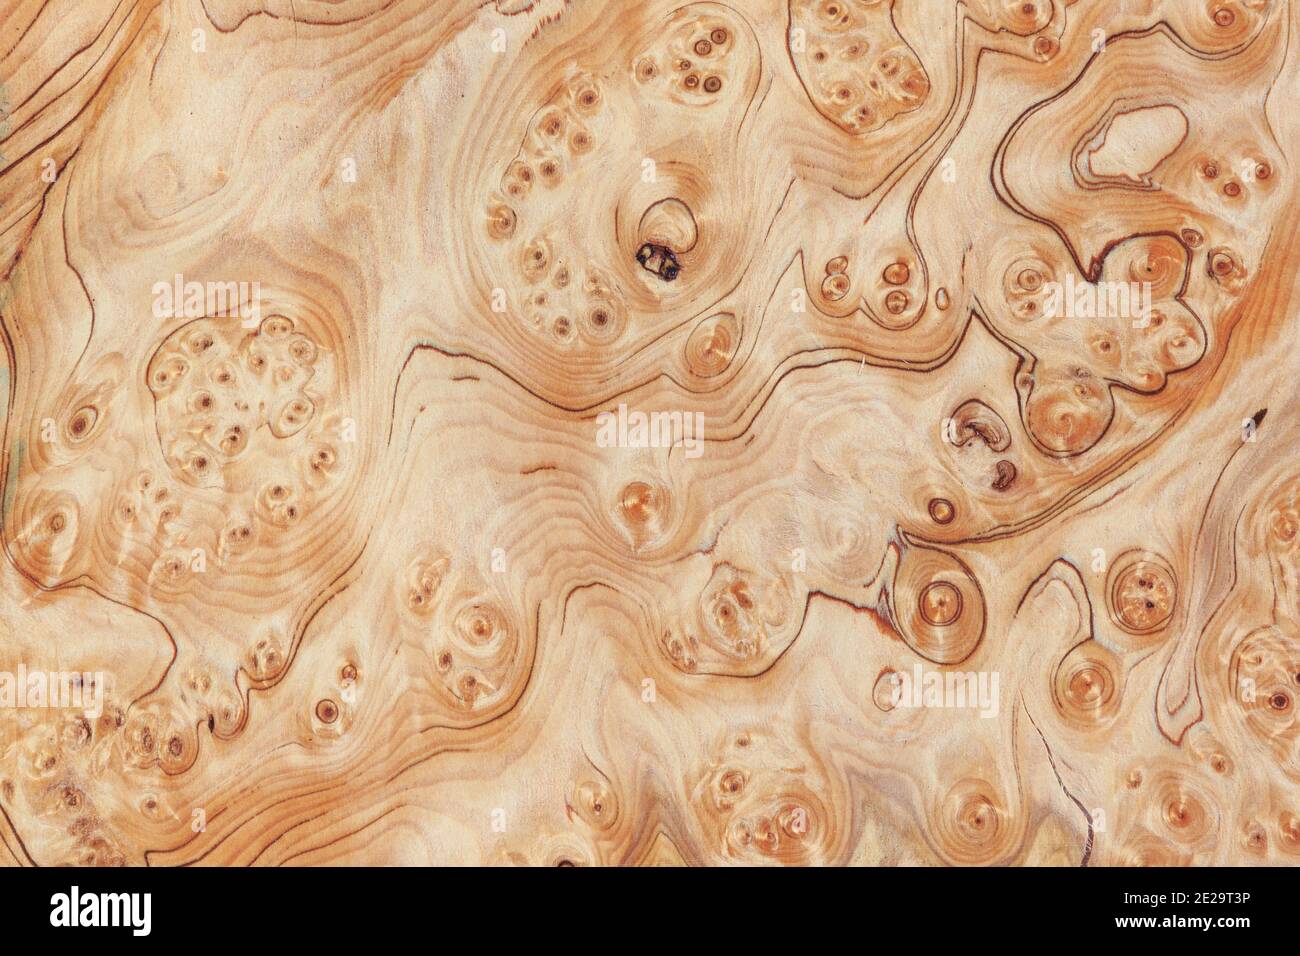 Wood burl texture background. High resolution image of exotic hardwood veneer grain burr. Stock Photo